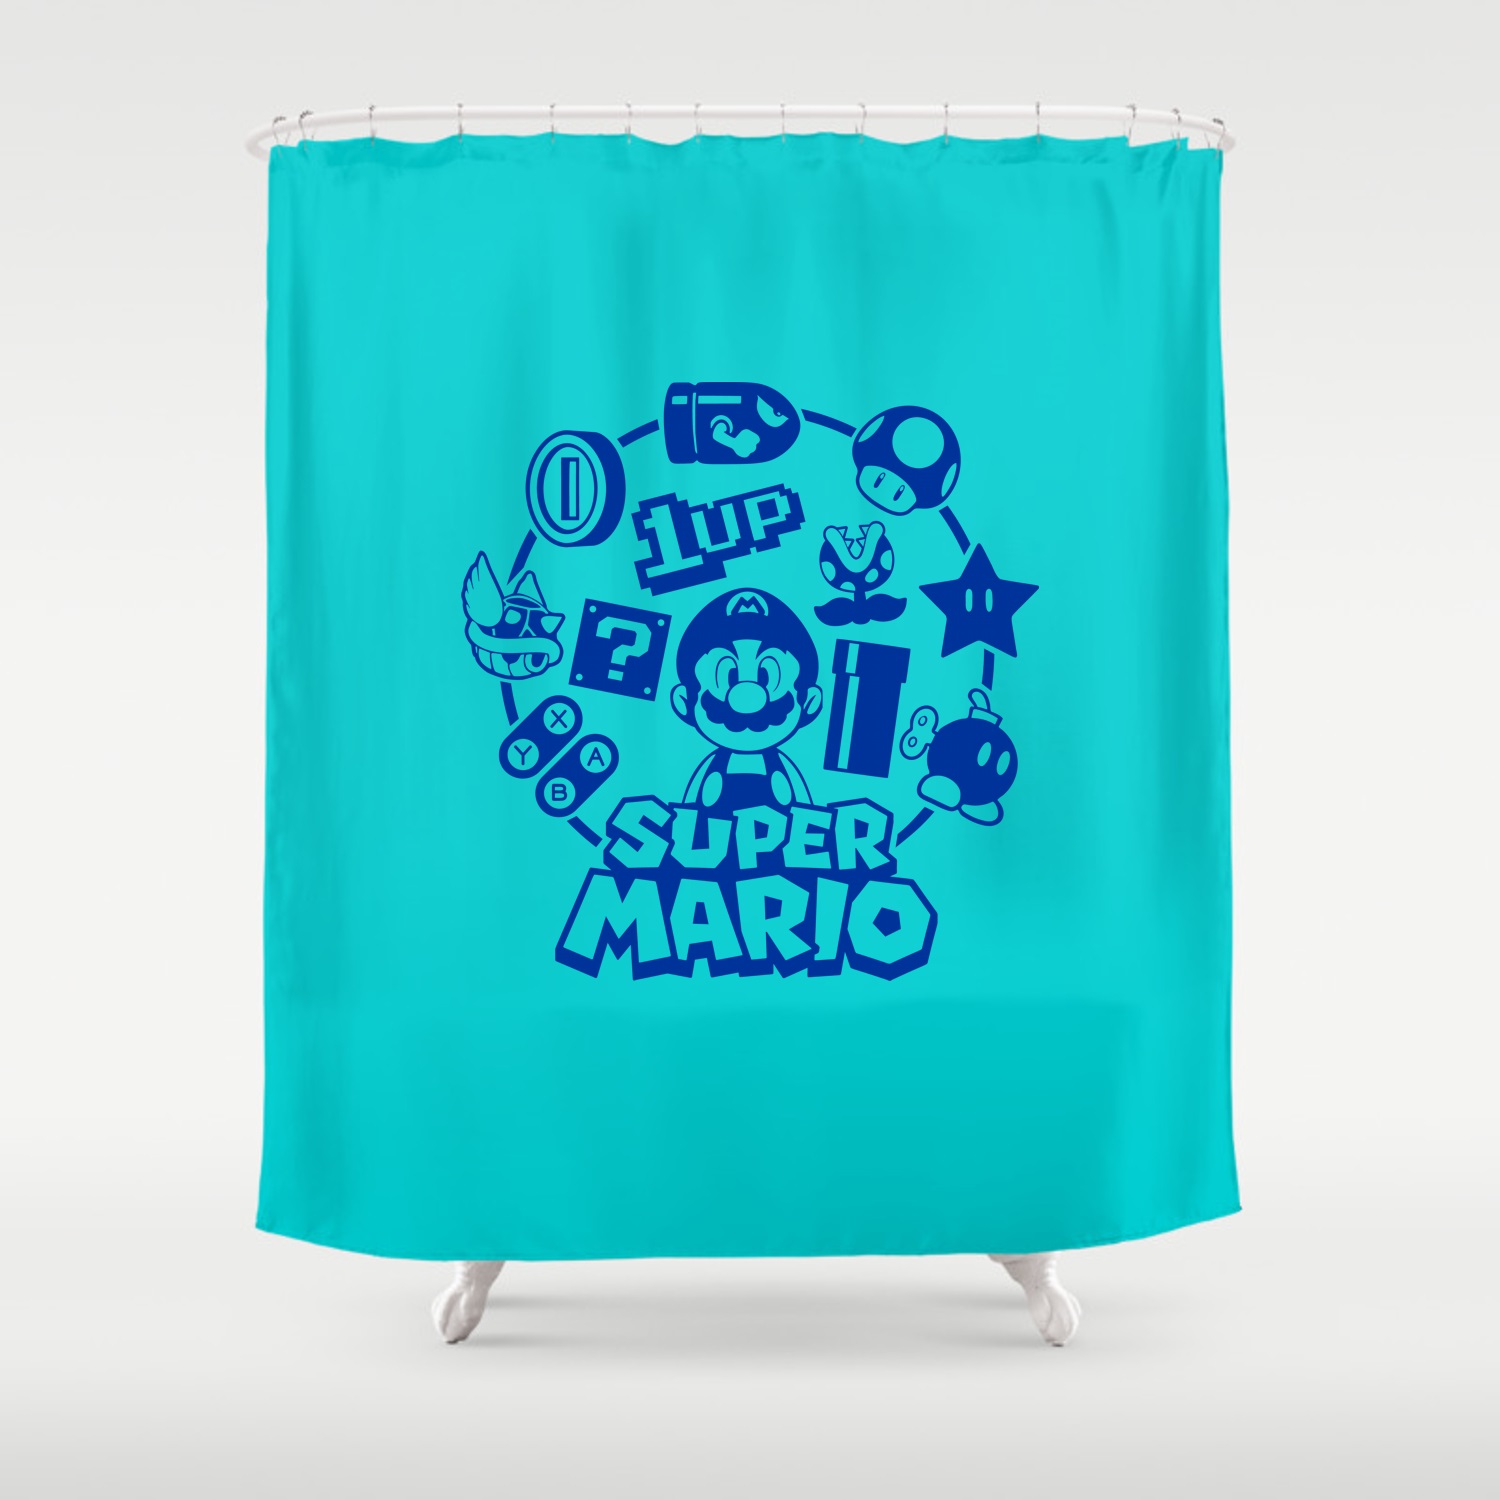 Super Mario Shower Curtain Turquoise/Blue